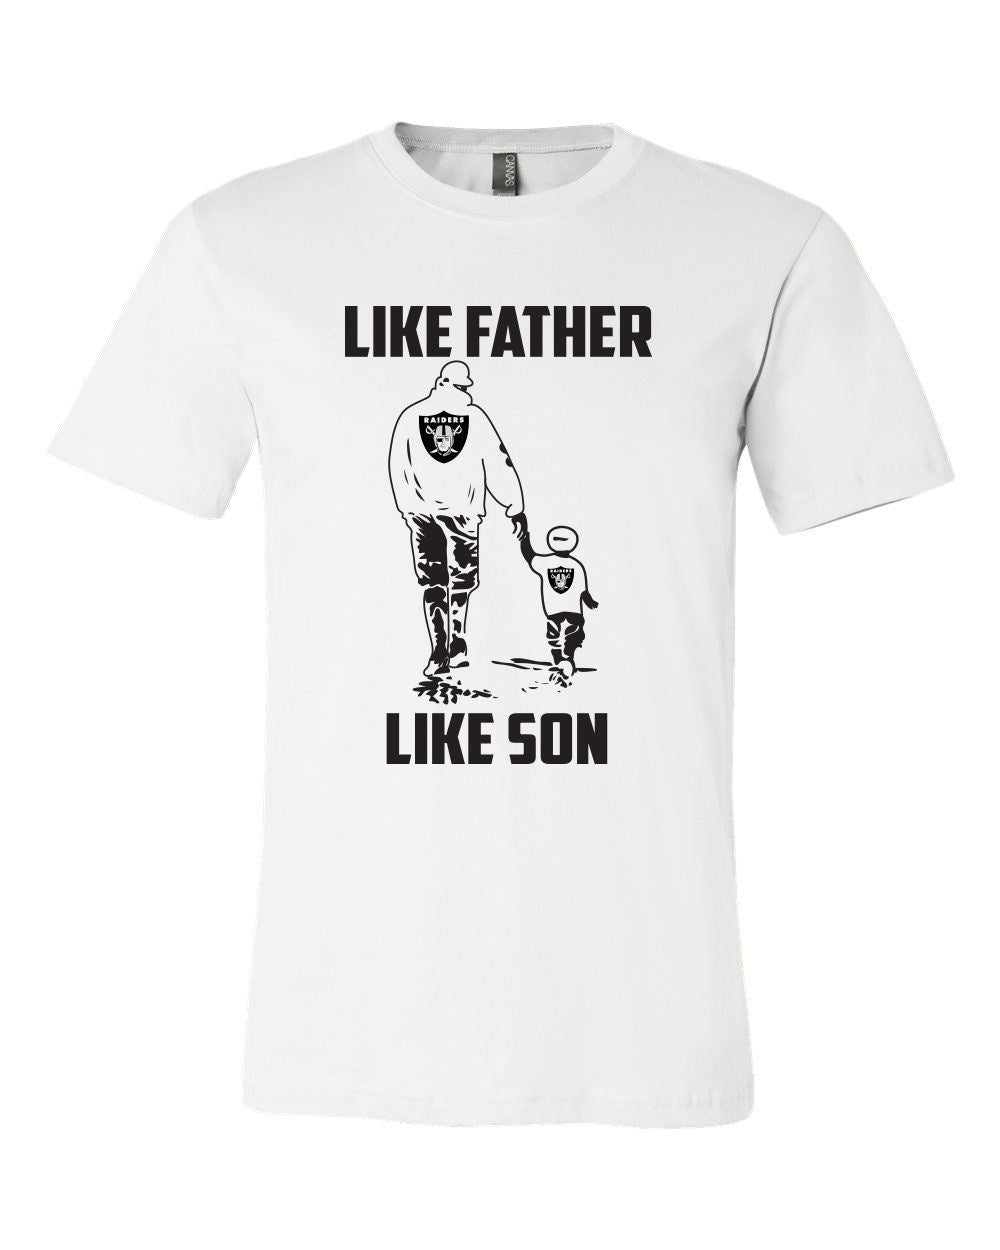 raiders dad shirt